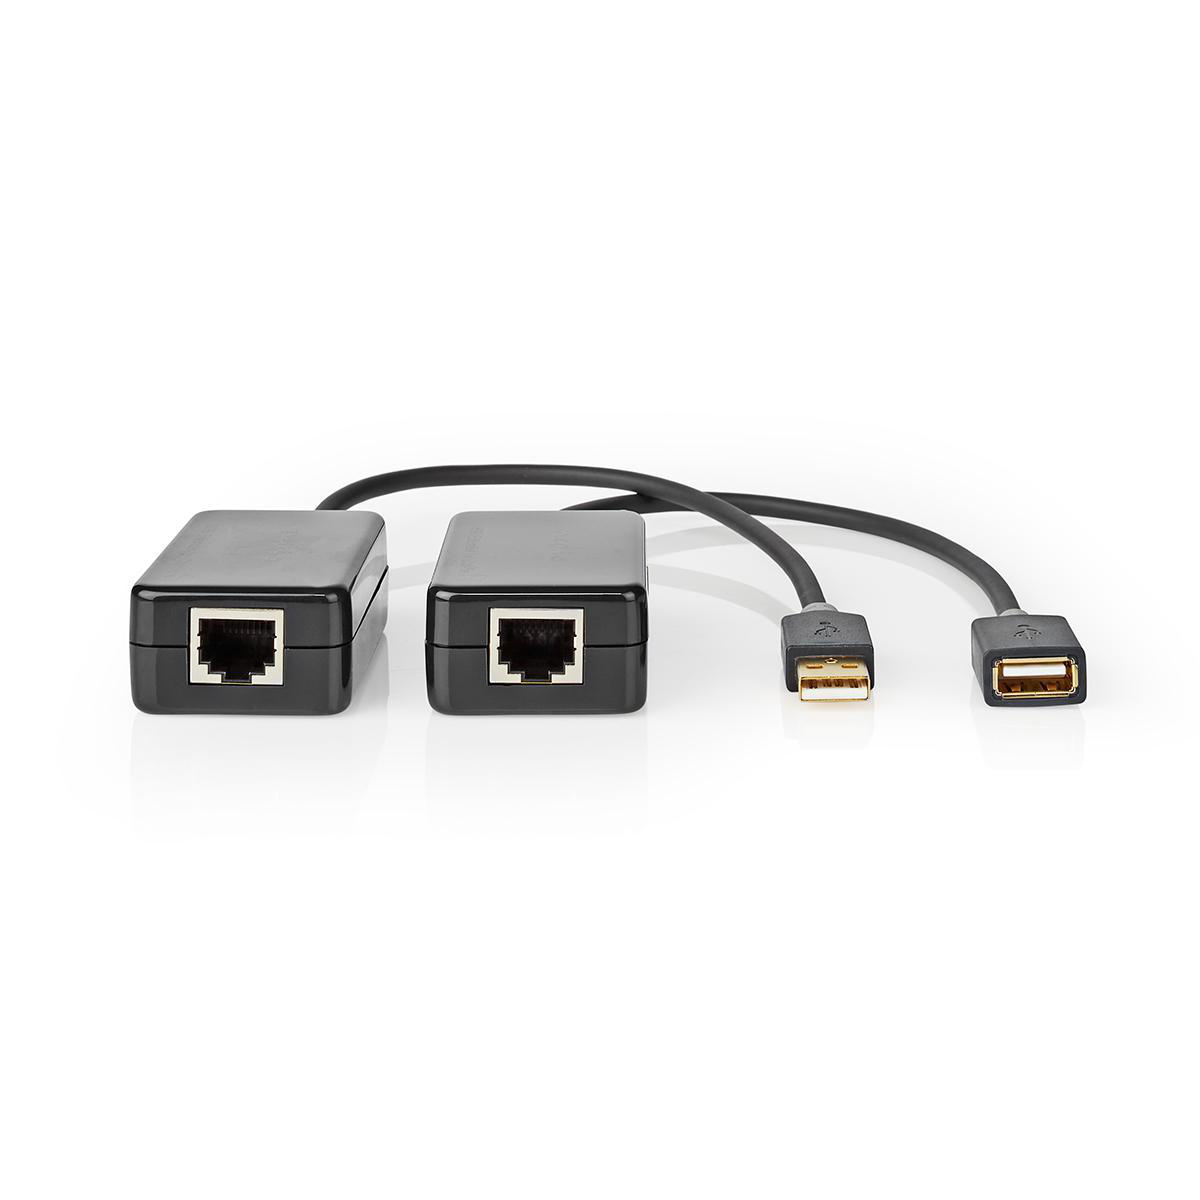 NEDIS CCBW60EXTBK500, 0,20 m USB-Extender